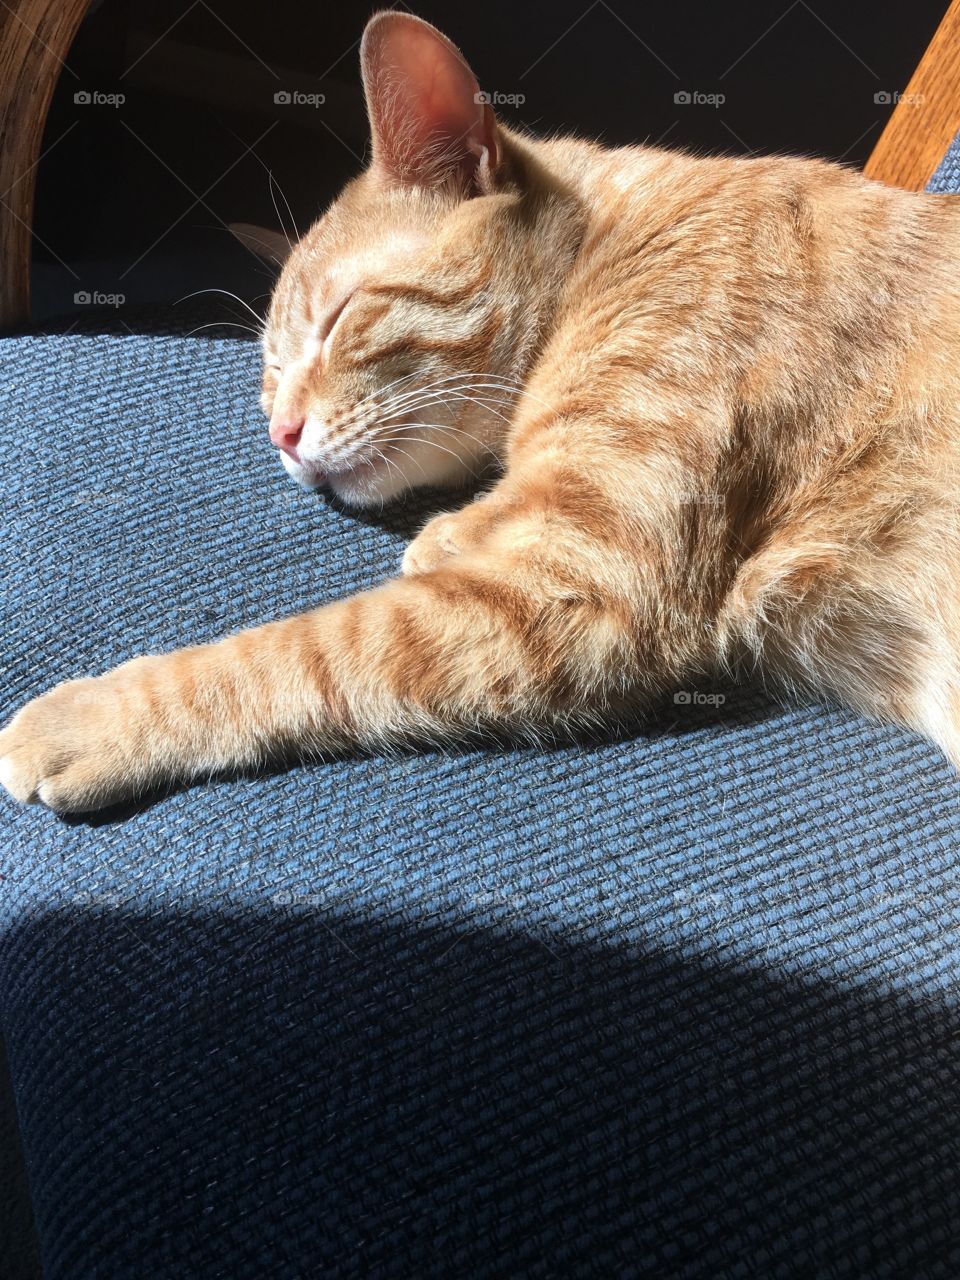 Orange Kitty sleeping peacefully and cute 